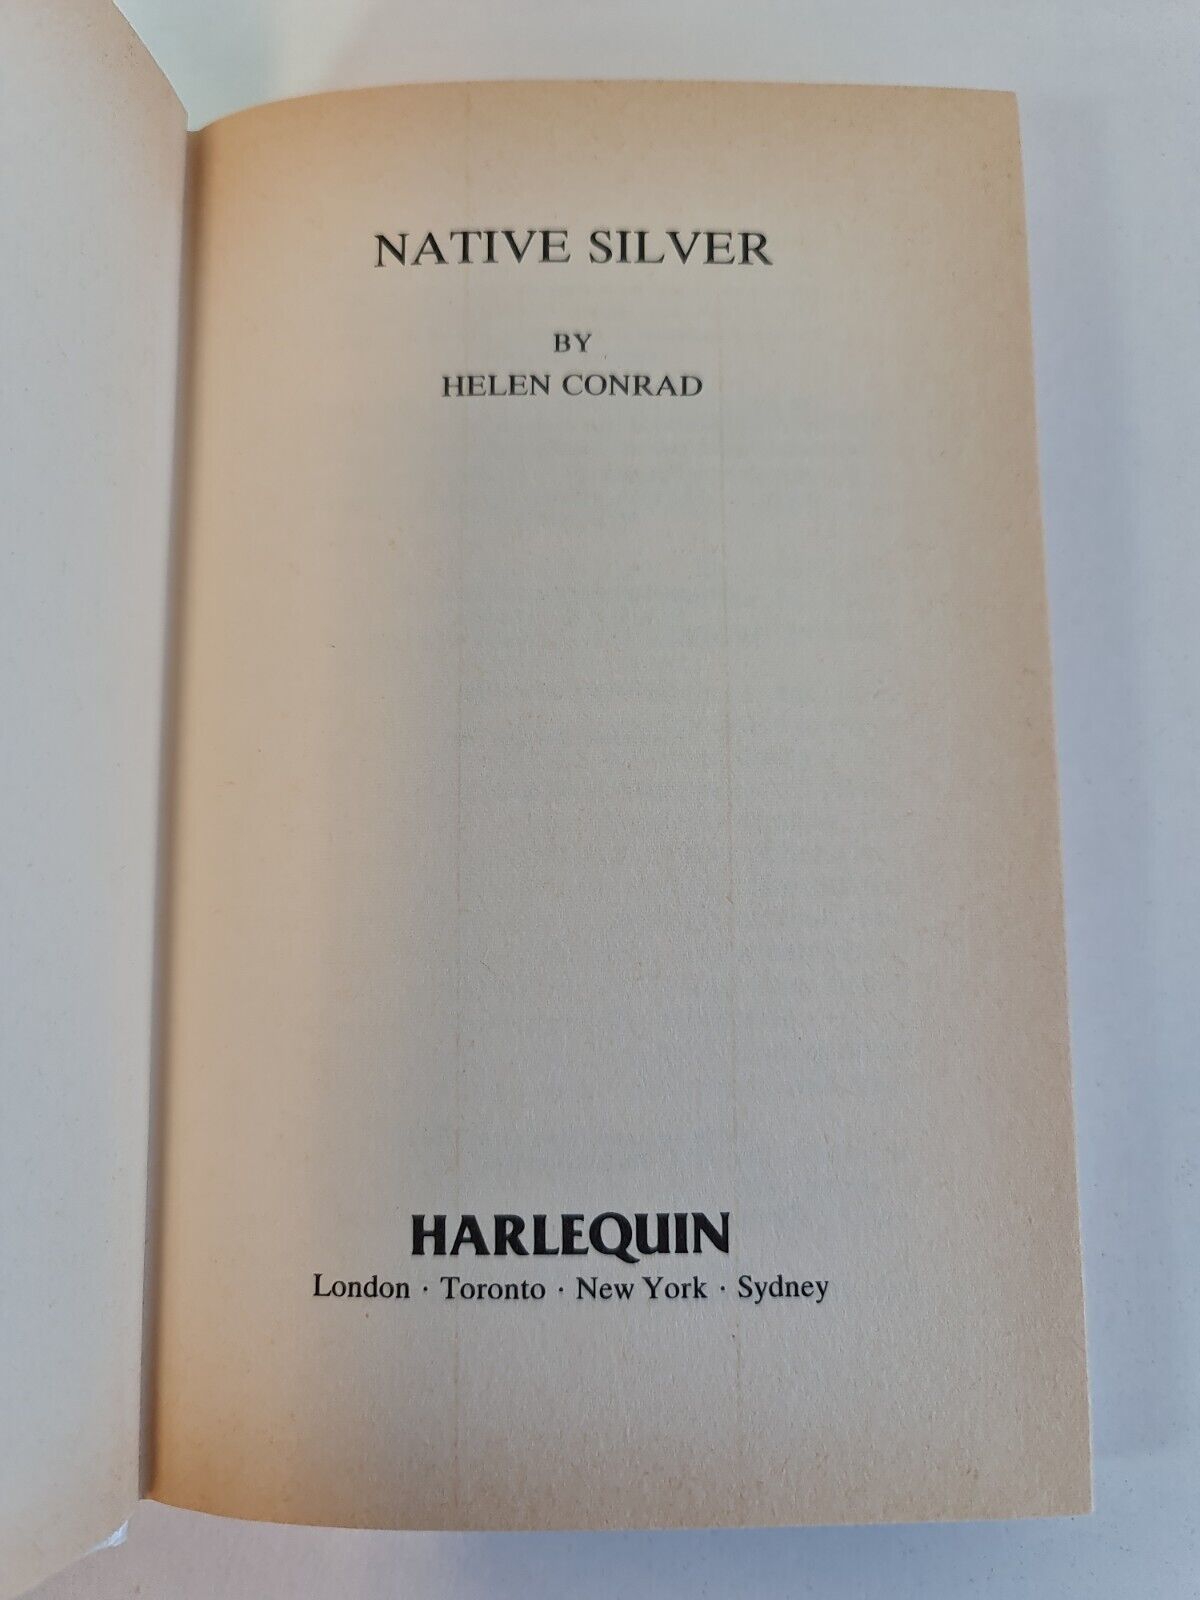 Native Silver by Helen Conrad (1985)